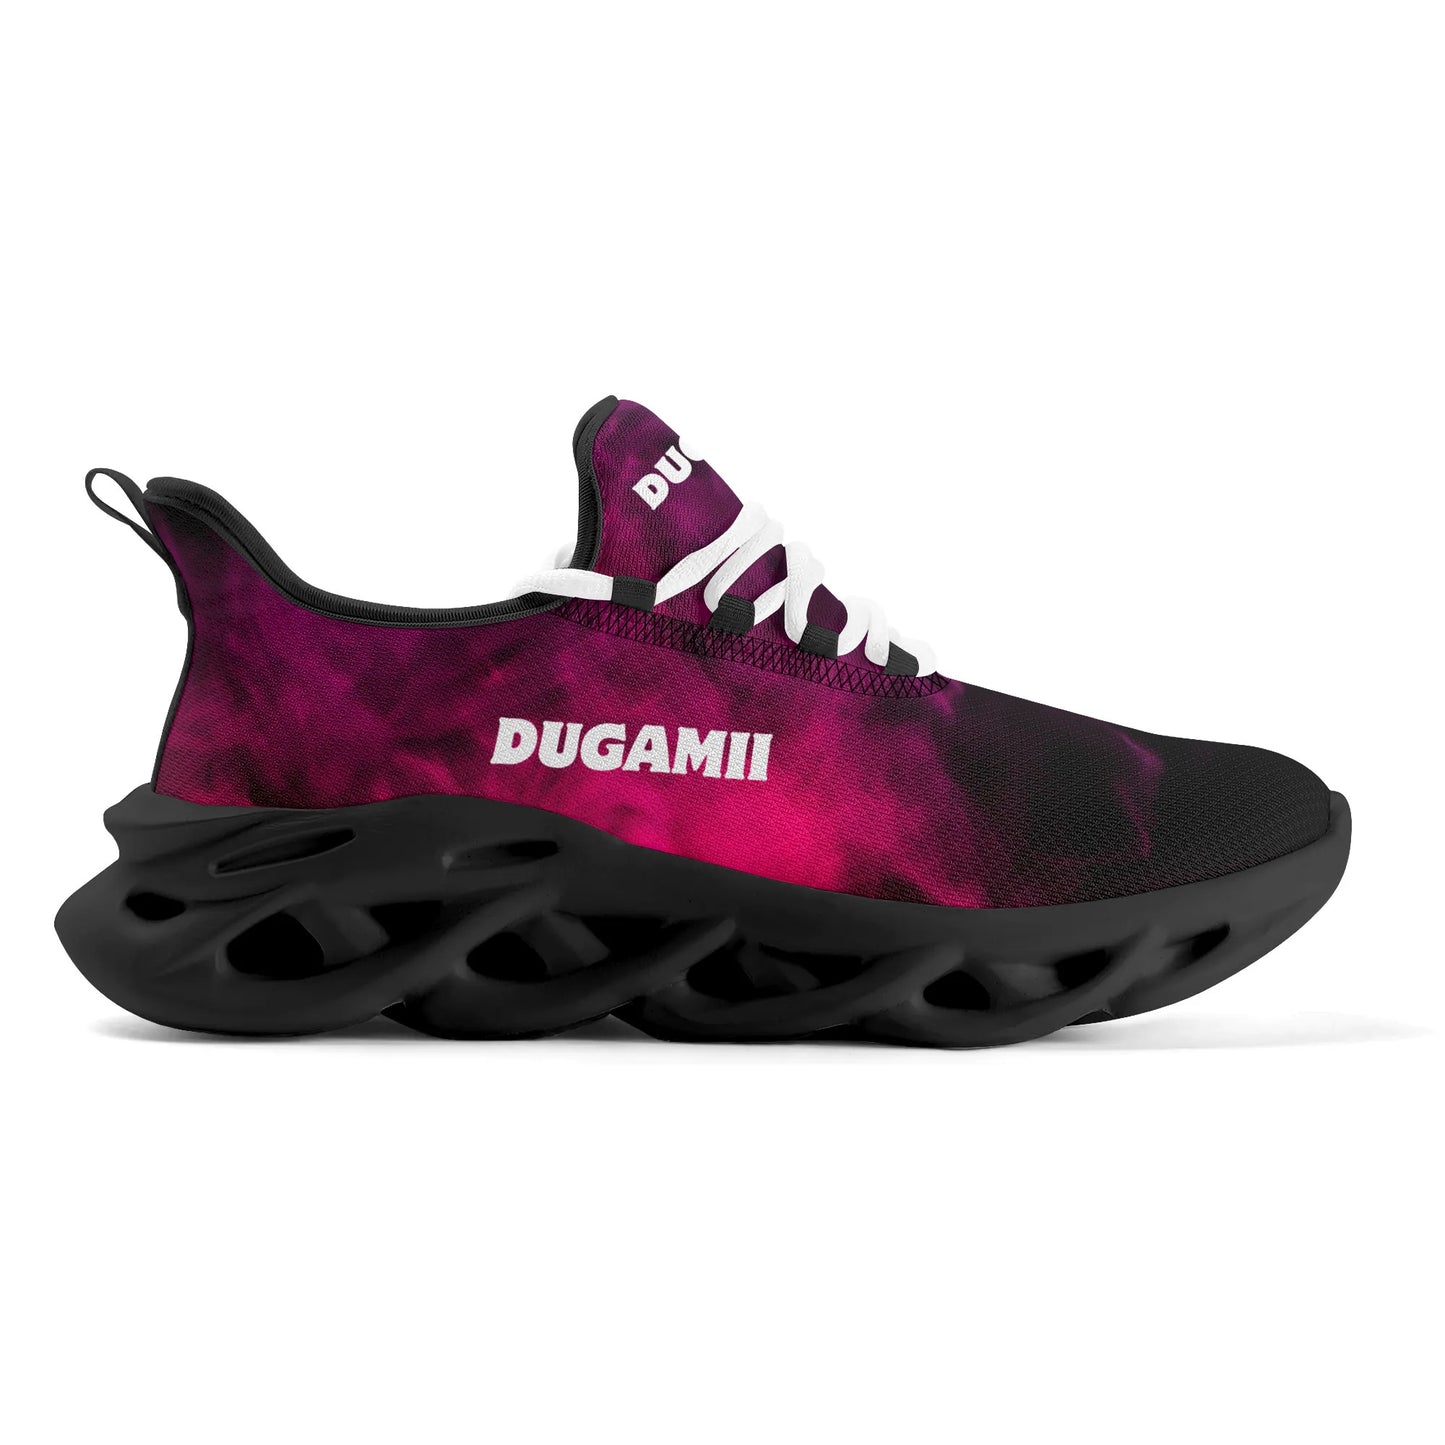 Mens DuGamii Premium M-Sole Star Walker Limited Edition Black Training Sneakers